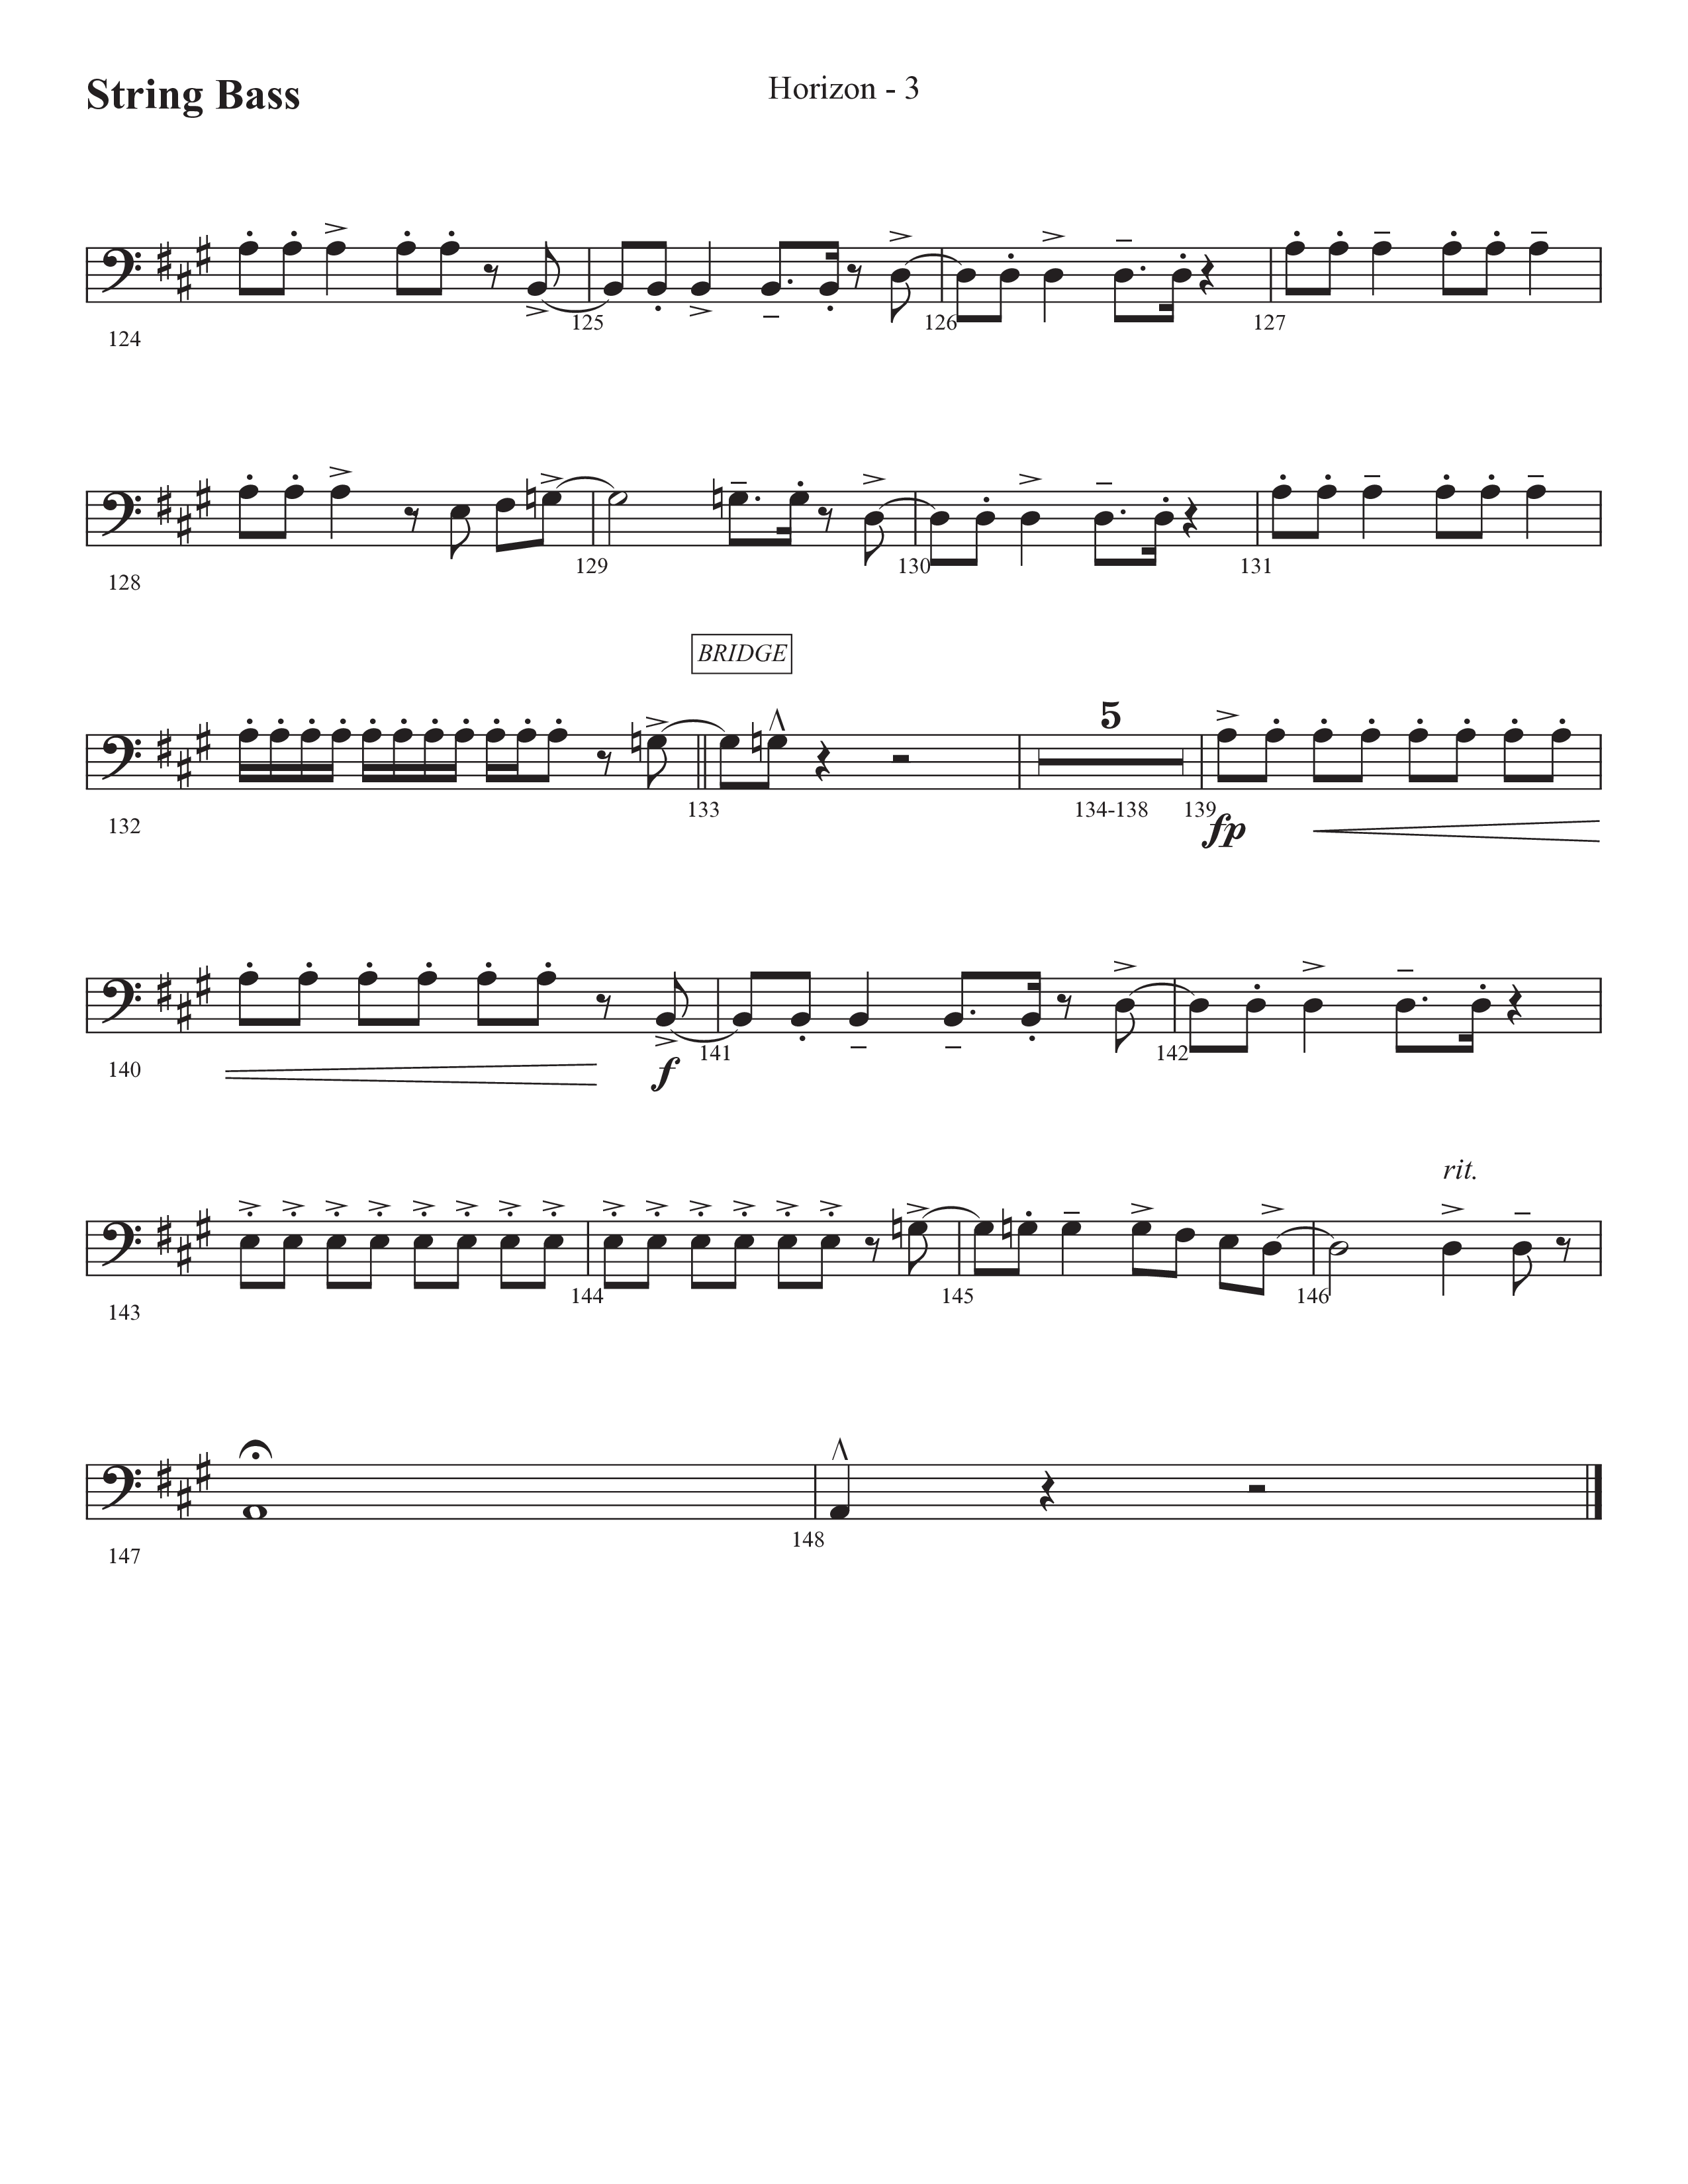 Horizon (Choral Anthem SATB) String Bass (Prestonwood Worship / Prestonwood Choir / Michael Neale / Orch. Jonathan Walker)